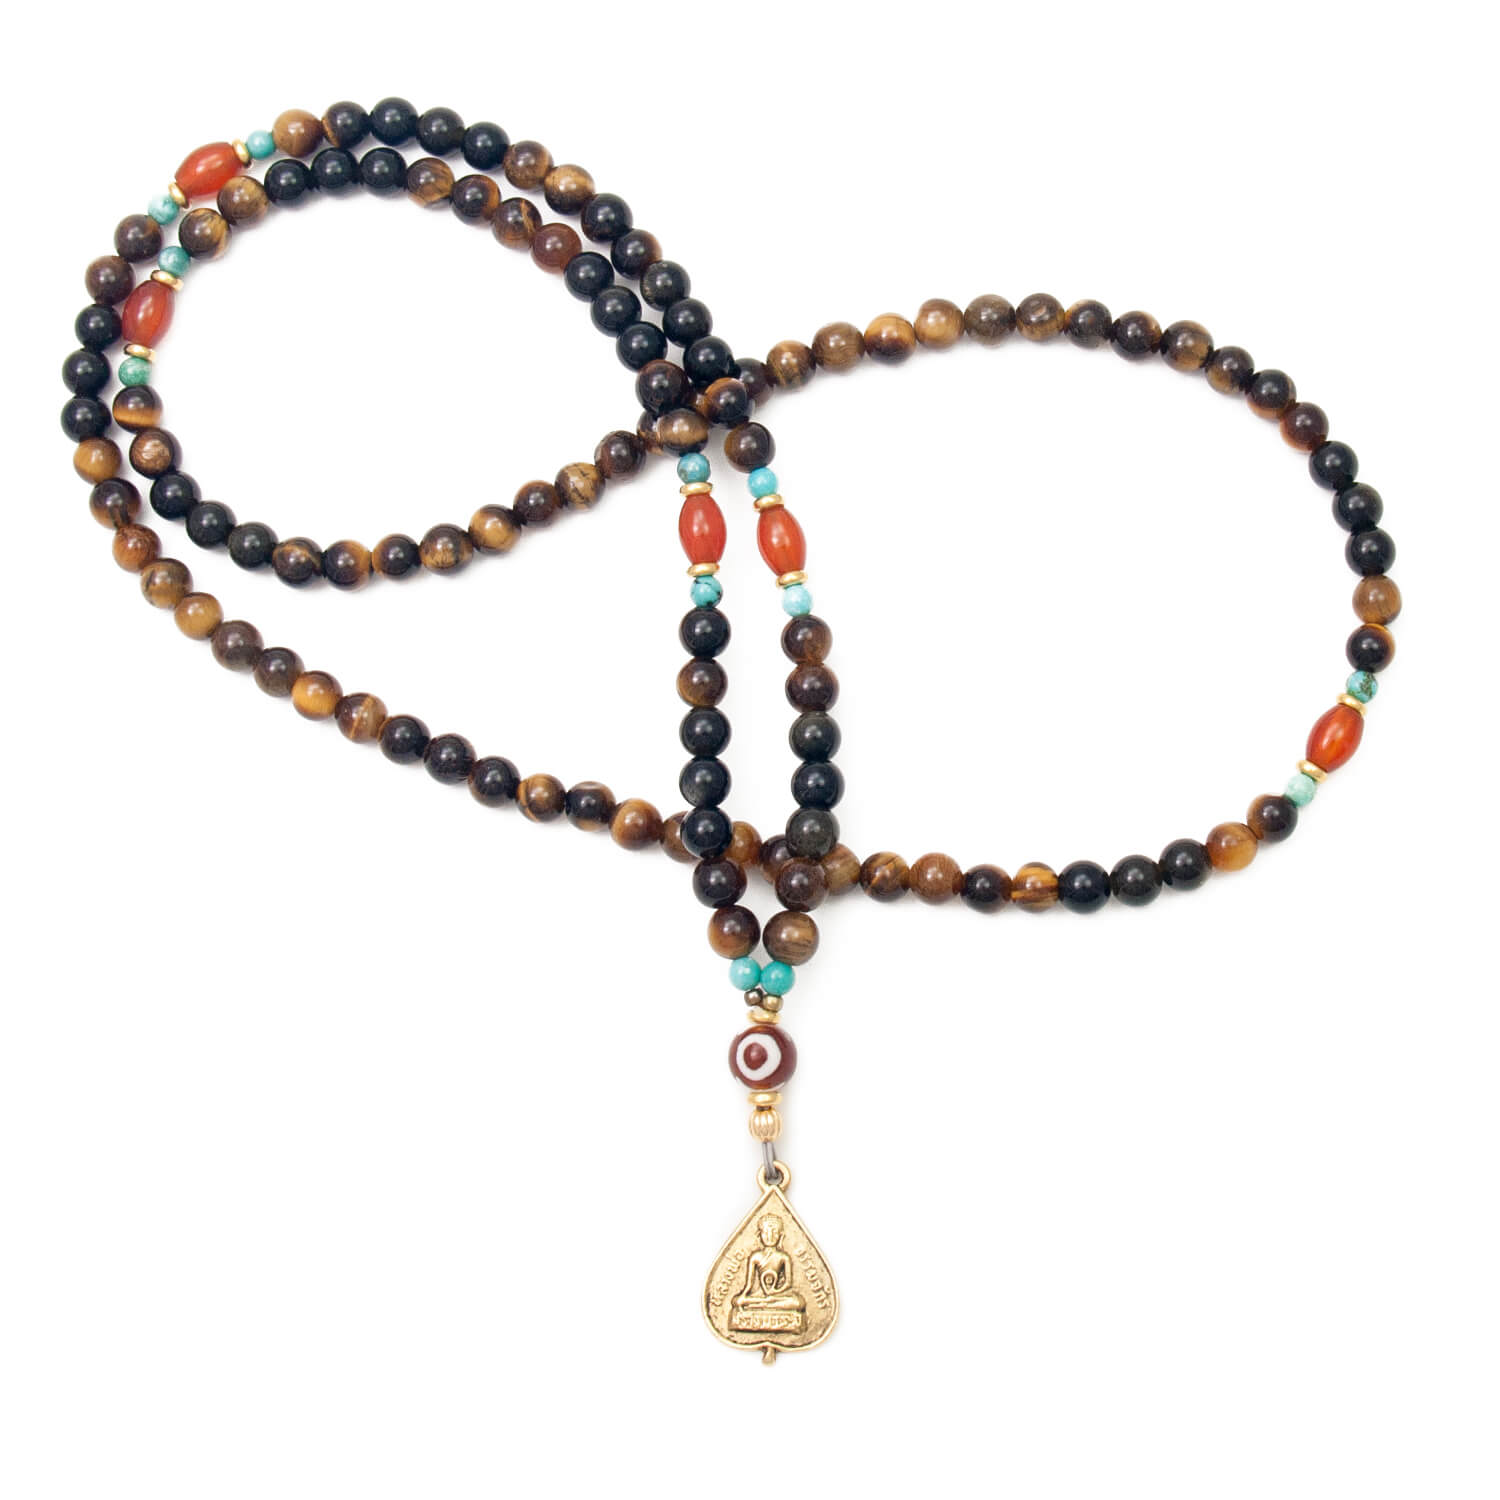 Middle Way Mala Necklace with Buddha Charm, Tiger Eye, Carnelian, Obsidian